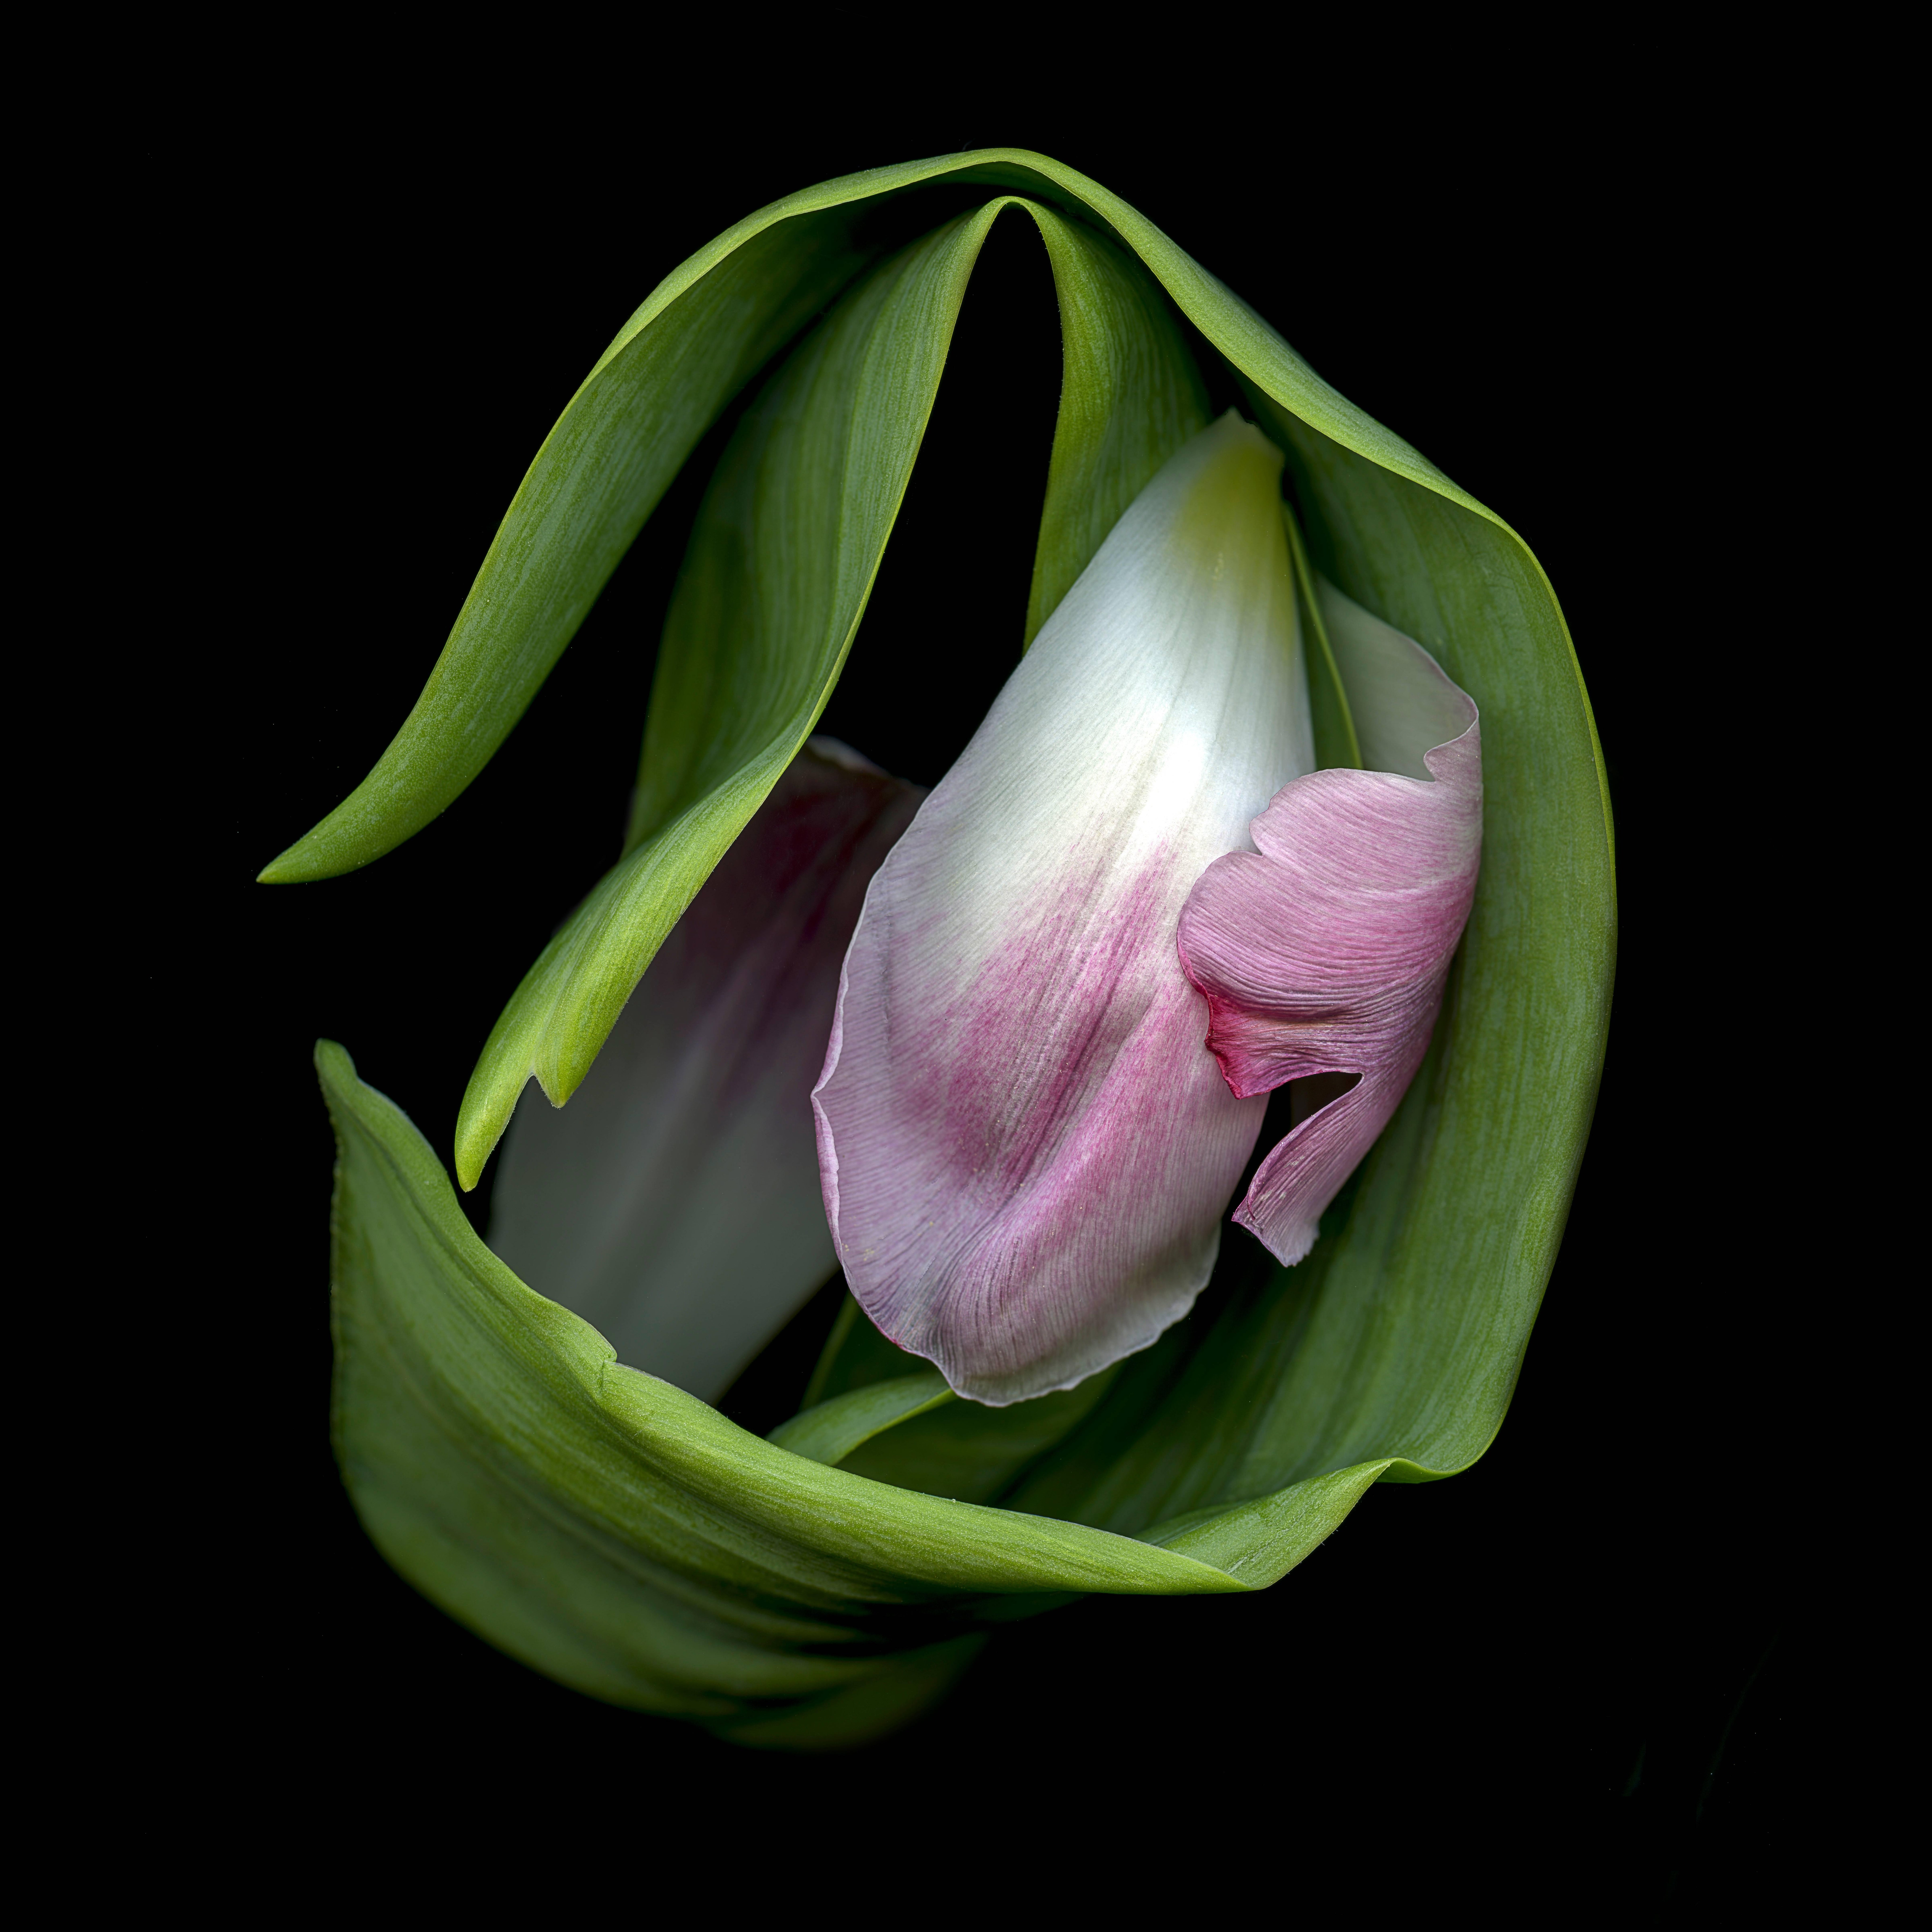 Jerry Freedner Still-Life Photograph - Tulip Construct 021 (Modern Flower Still Life Photograph of Pink & Green Tulip)